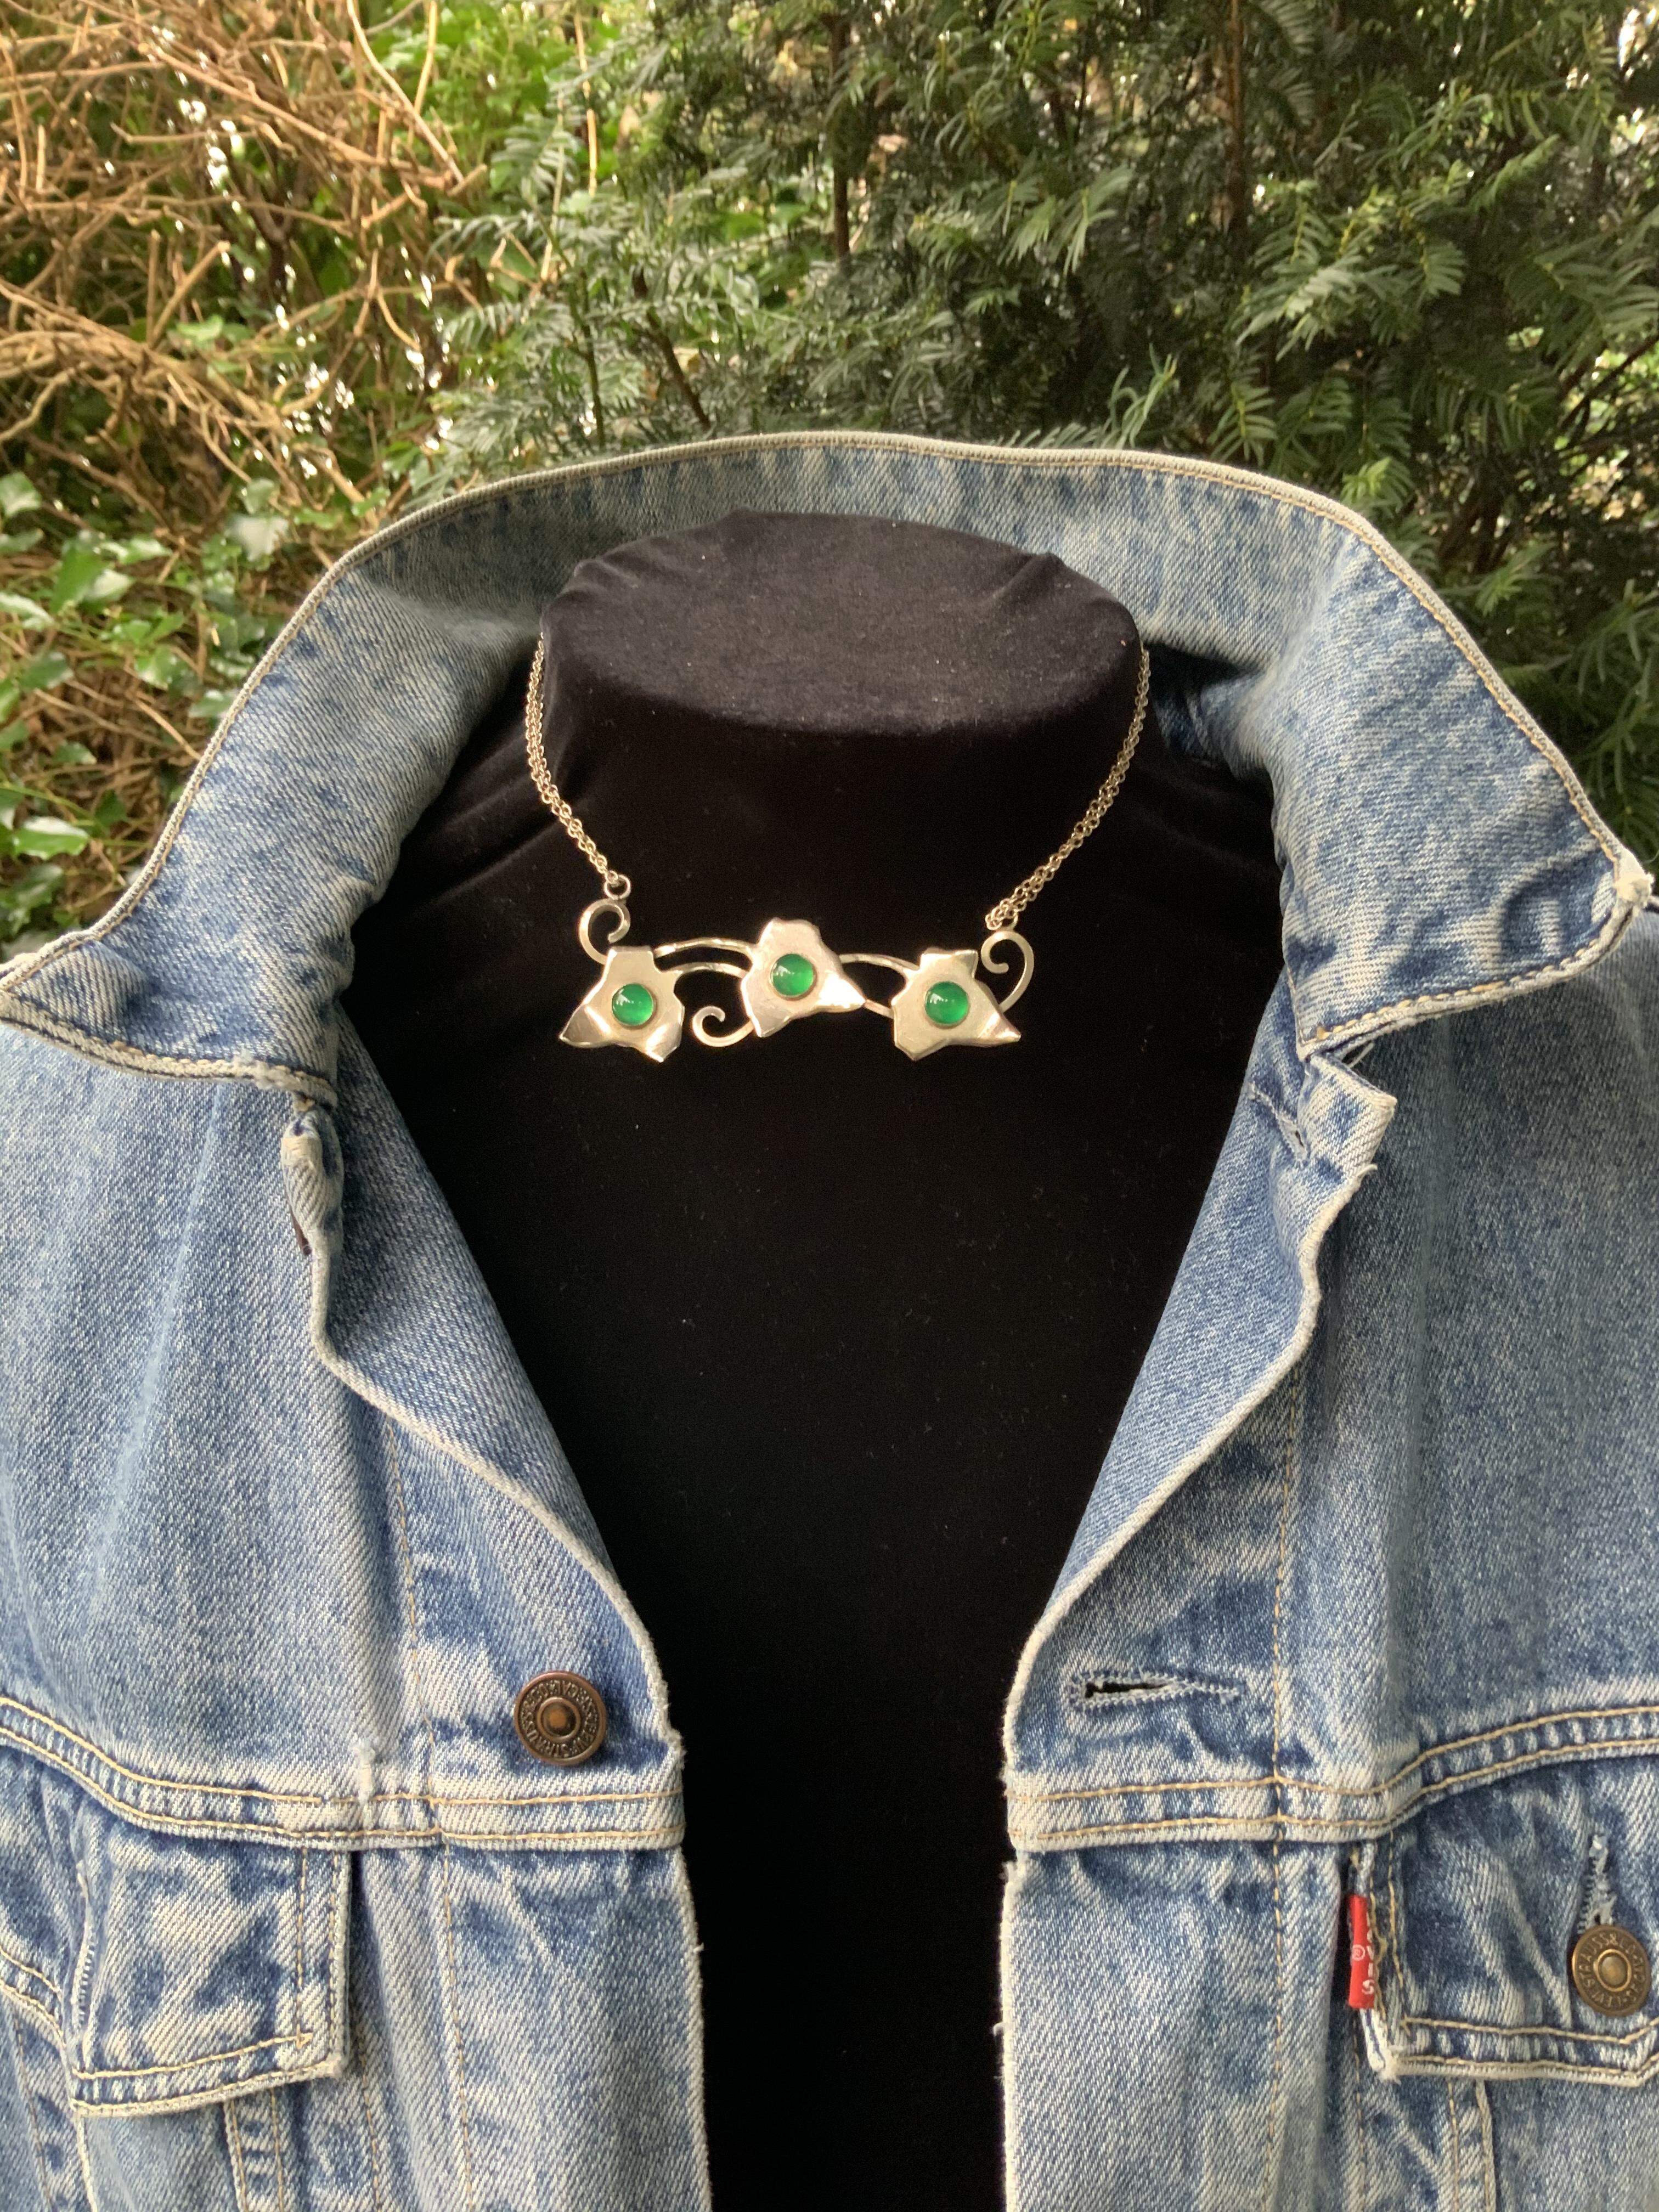 ‘Green Summer’ (necklace)